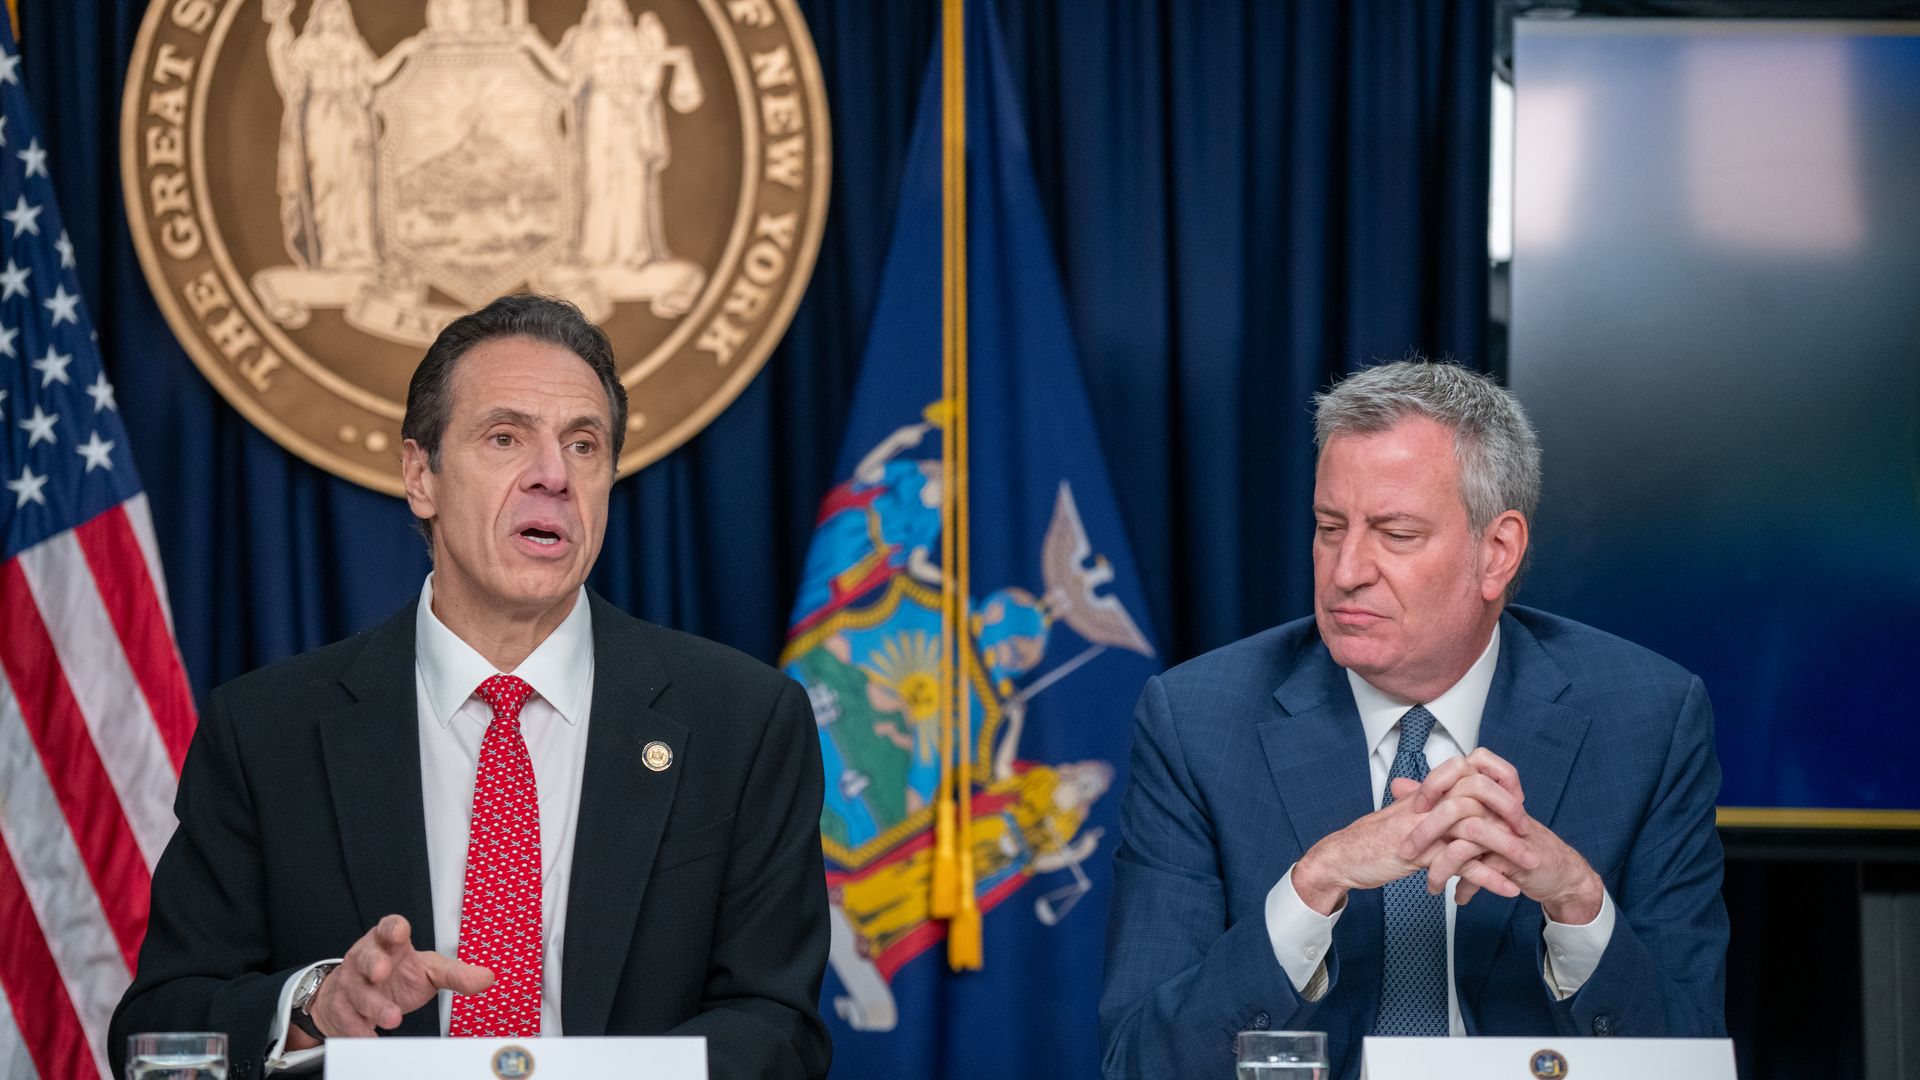 New York state Governor Andrew Cuomo and New York City Mayor Bill de Blasio